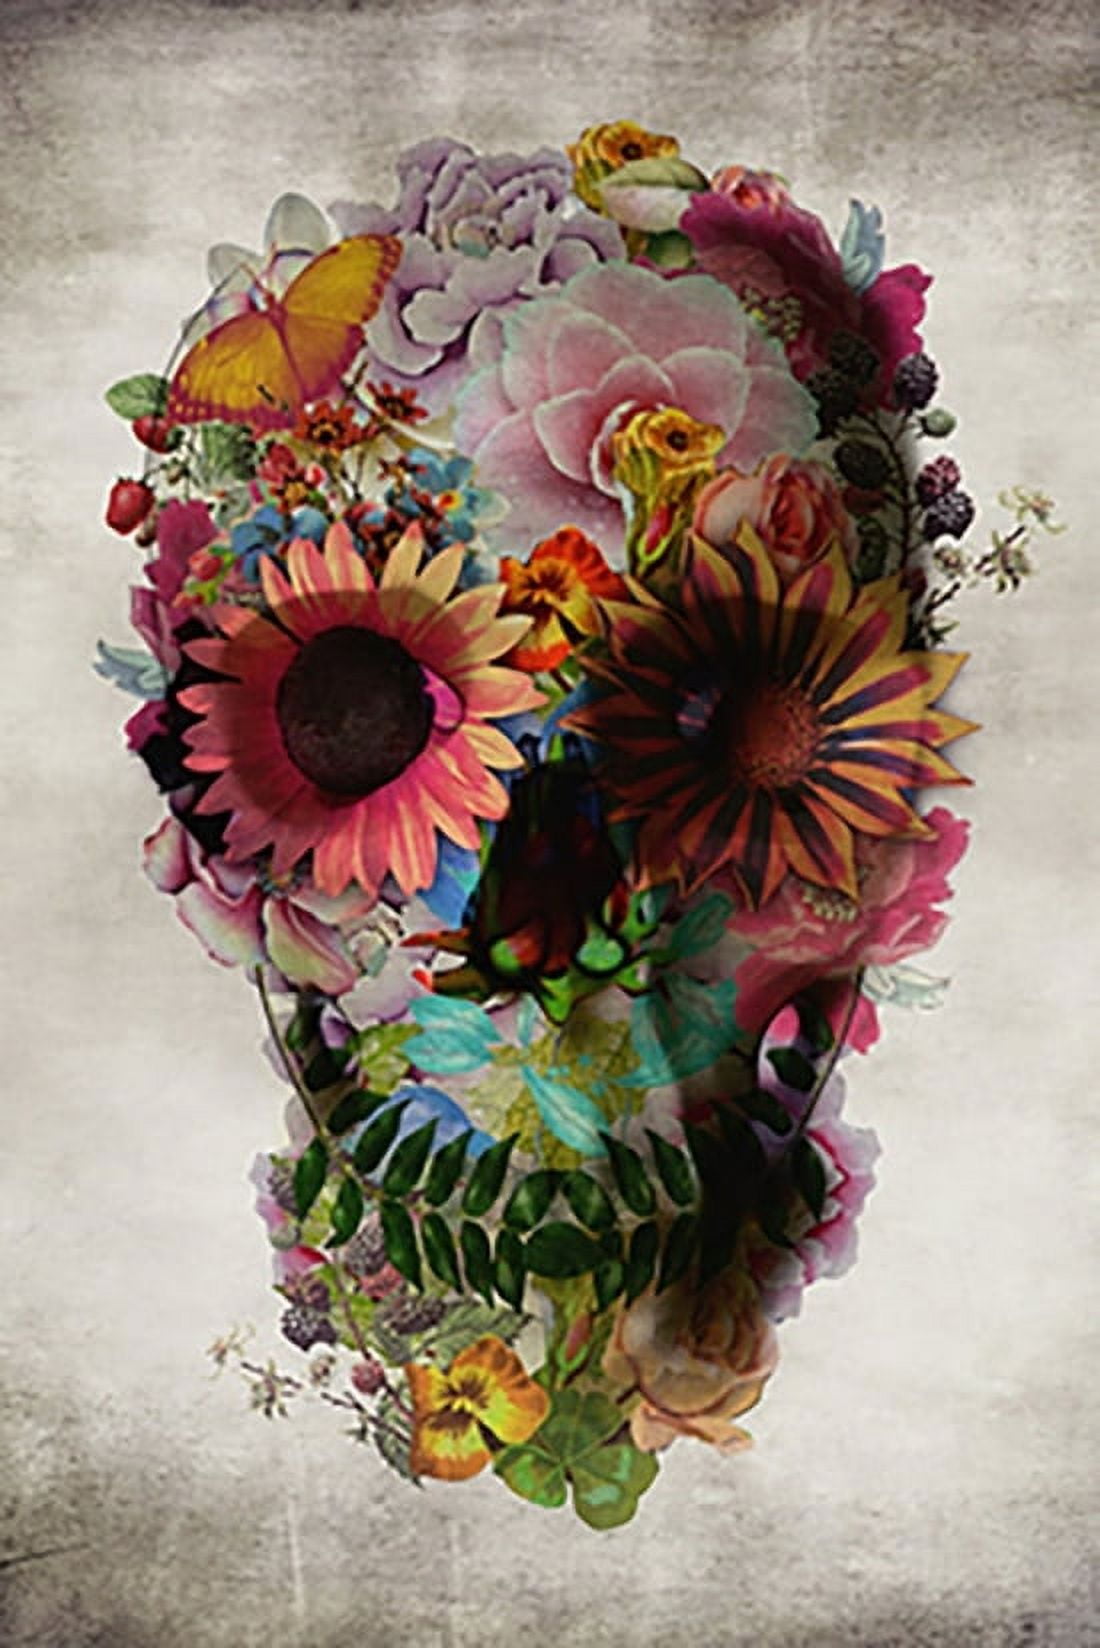 Floral Skull Art Poster (24 x 36) 